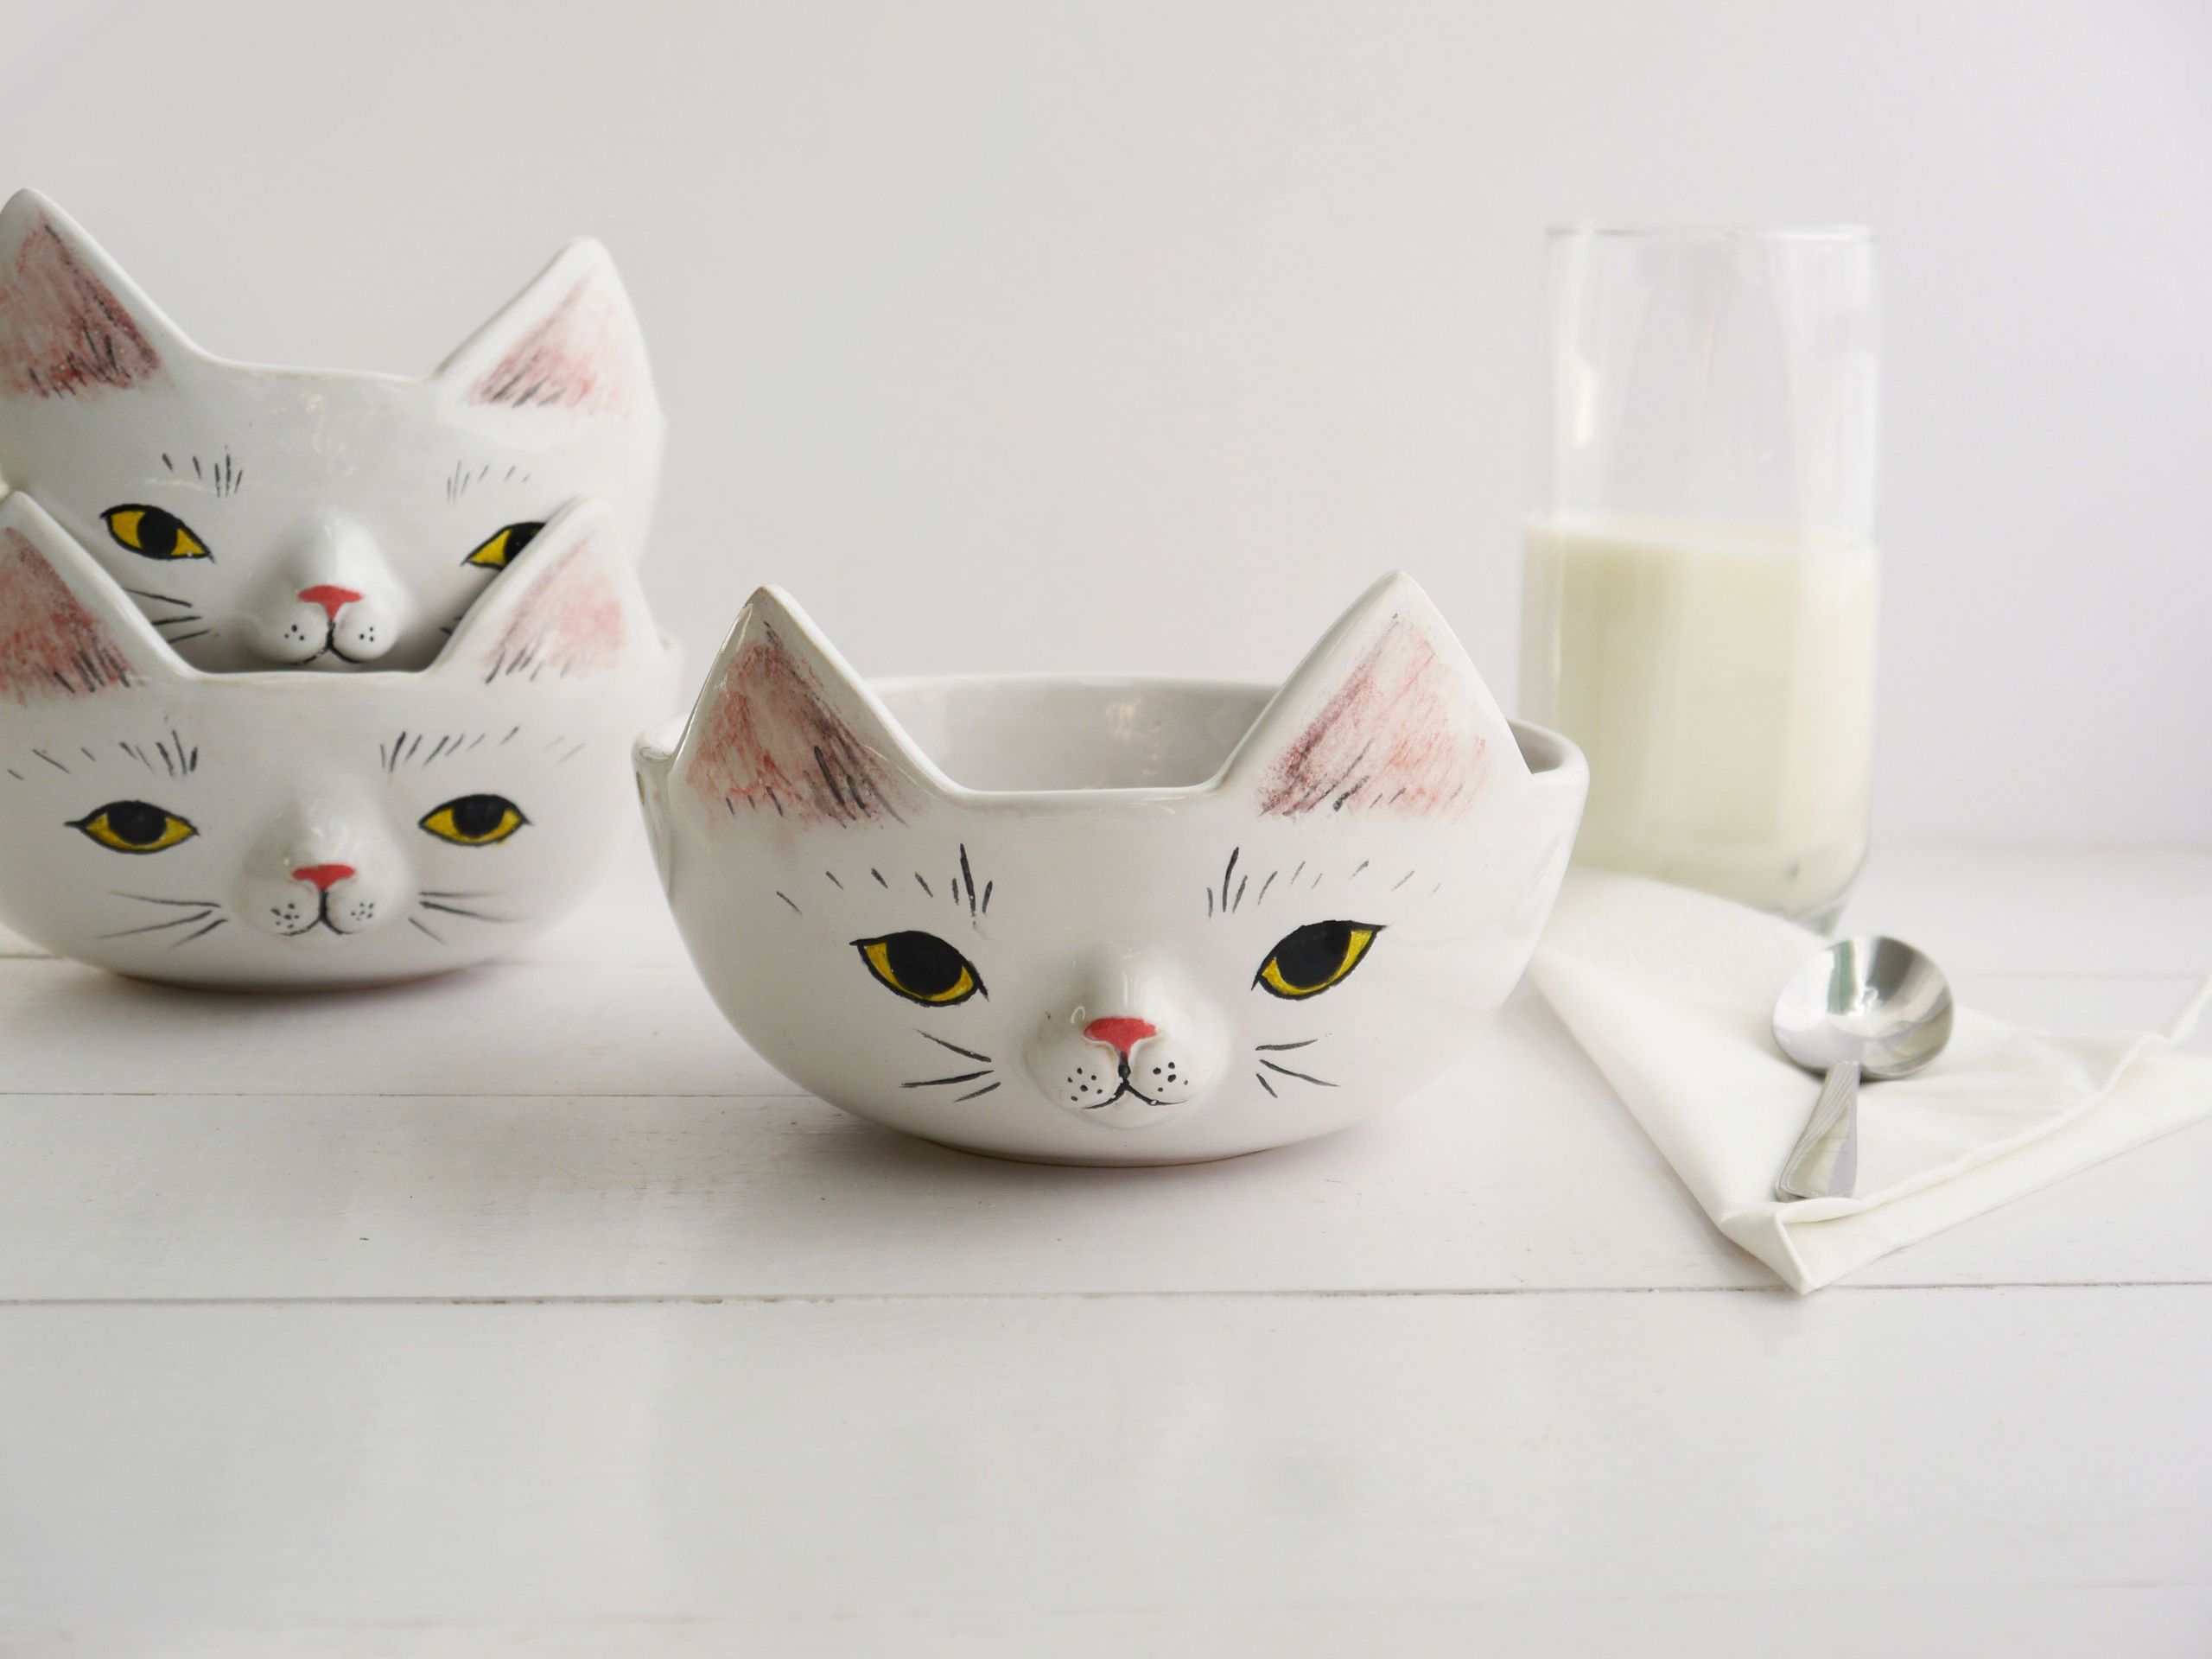 Gartendeko Sale Schön Cat Bowl White Breakfast Bowl Bowl with Cat Ceramic Cat